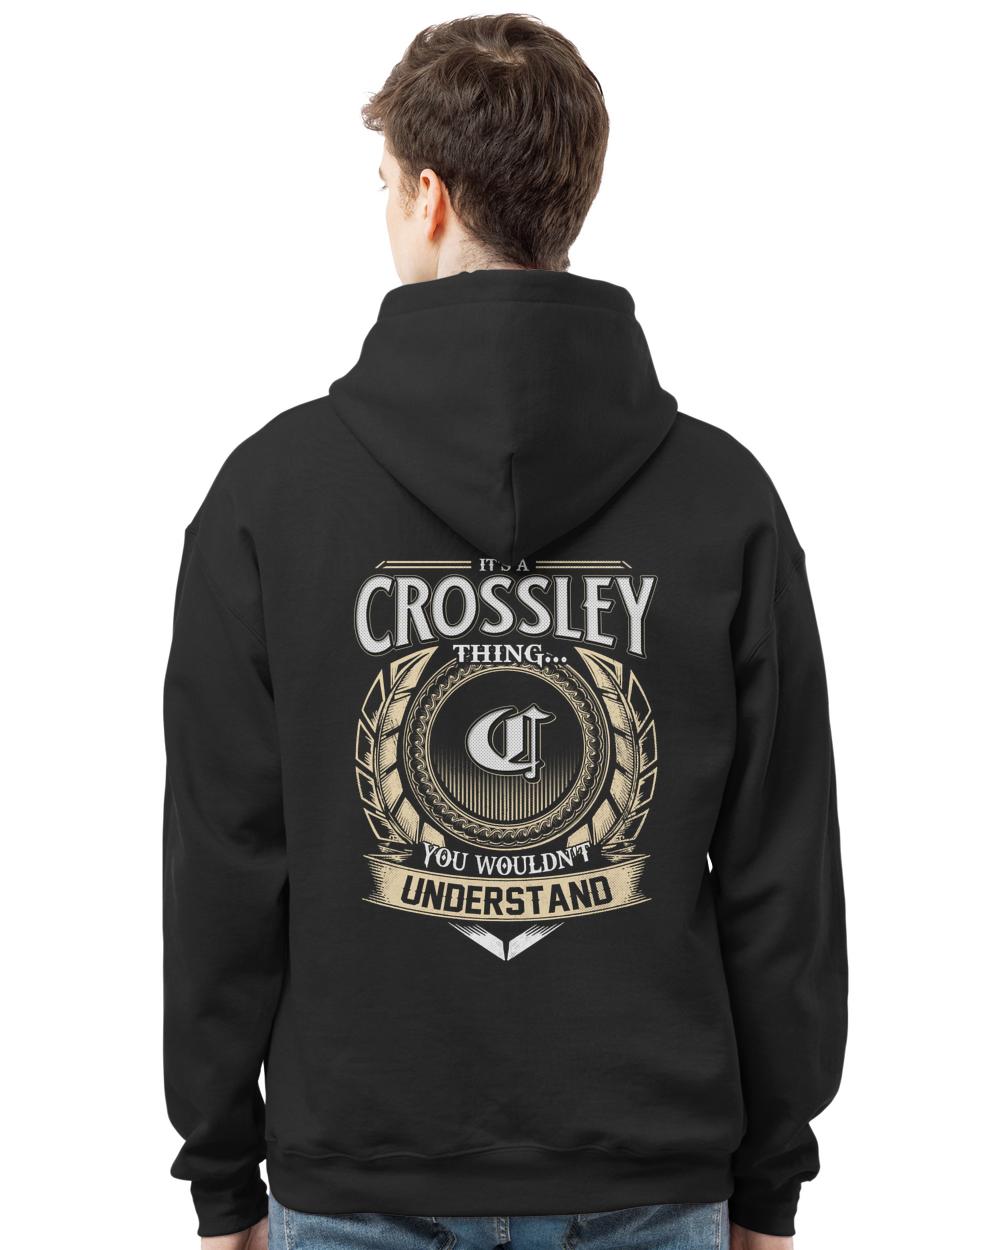 CROSSLEY-13K-46-01